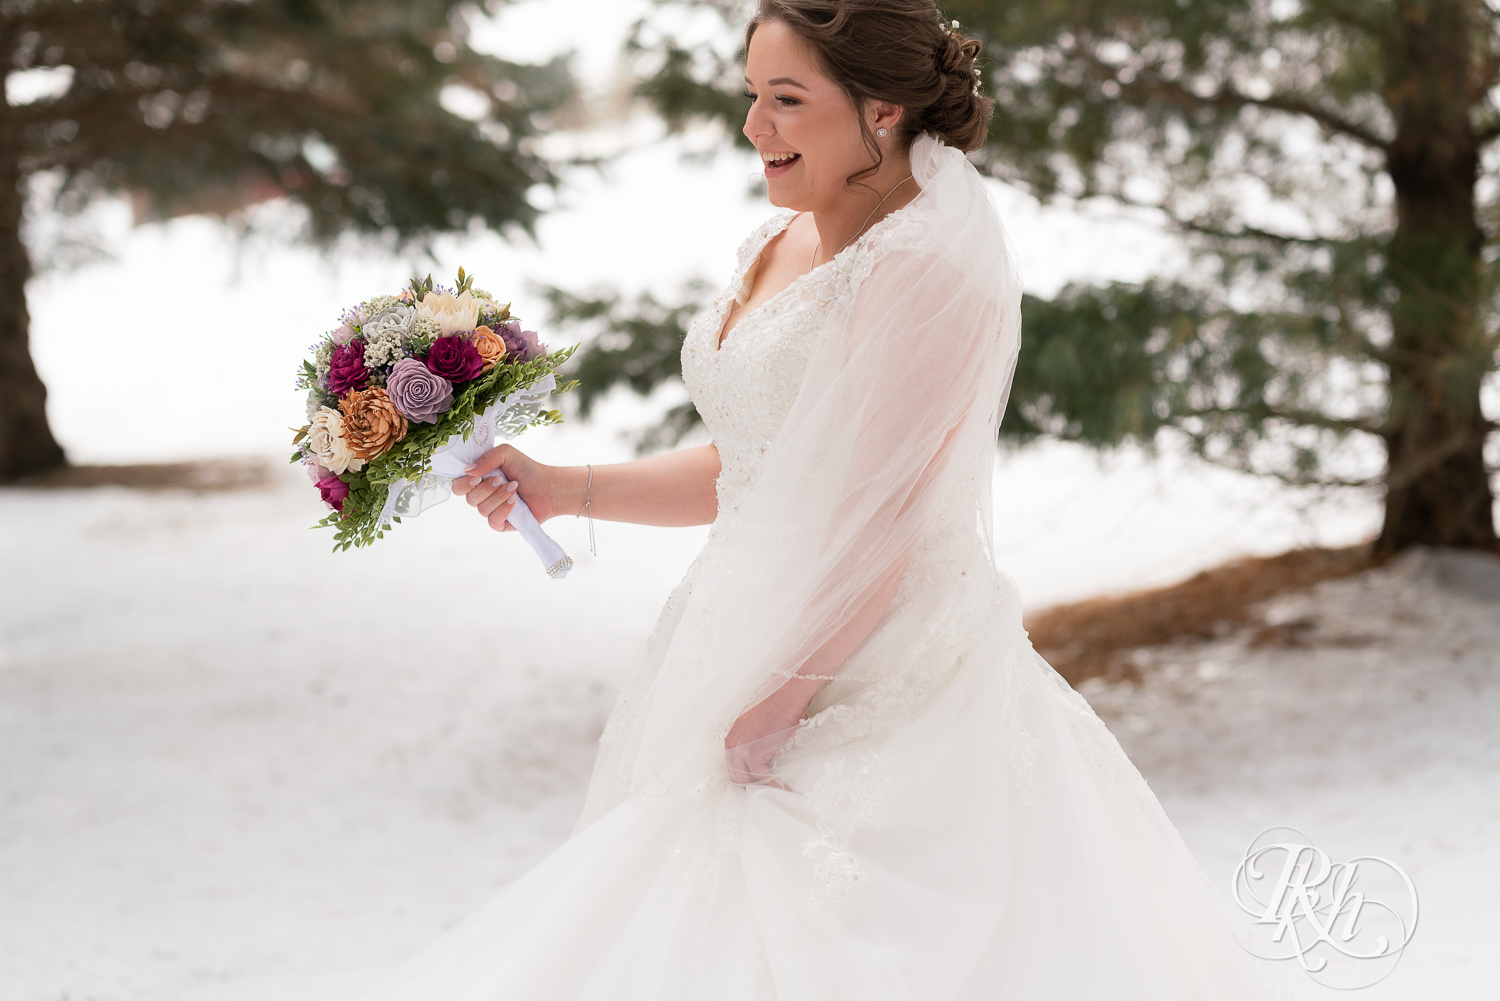 Bride dancing in the snow at Glenhaven Events in Farmington, Minnesota.